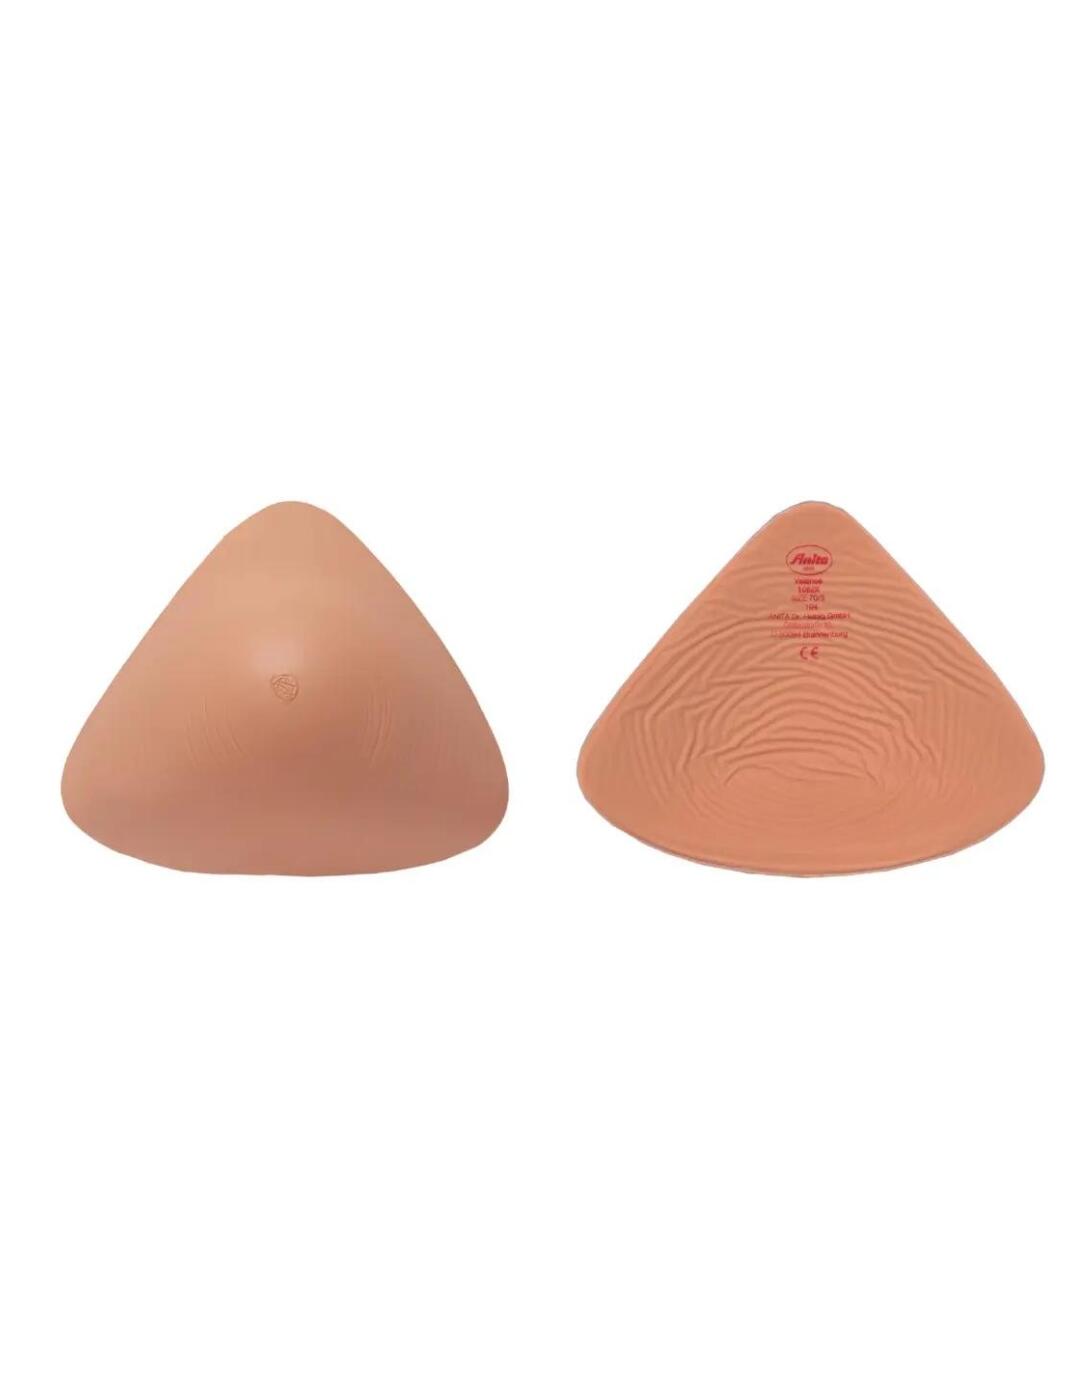 Shop Breast Prosthesis's Australia - Super Soft Breast Form